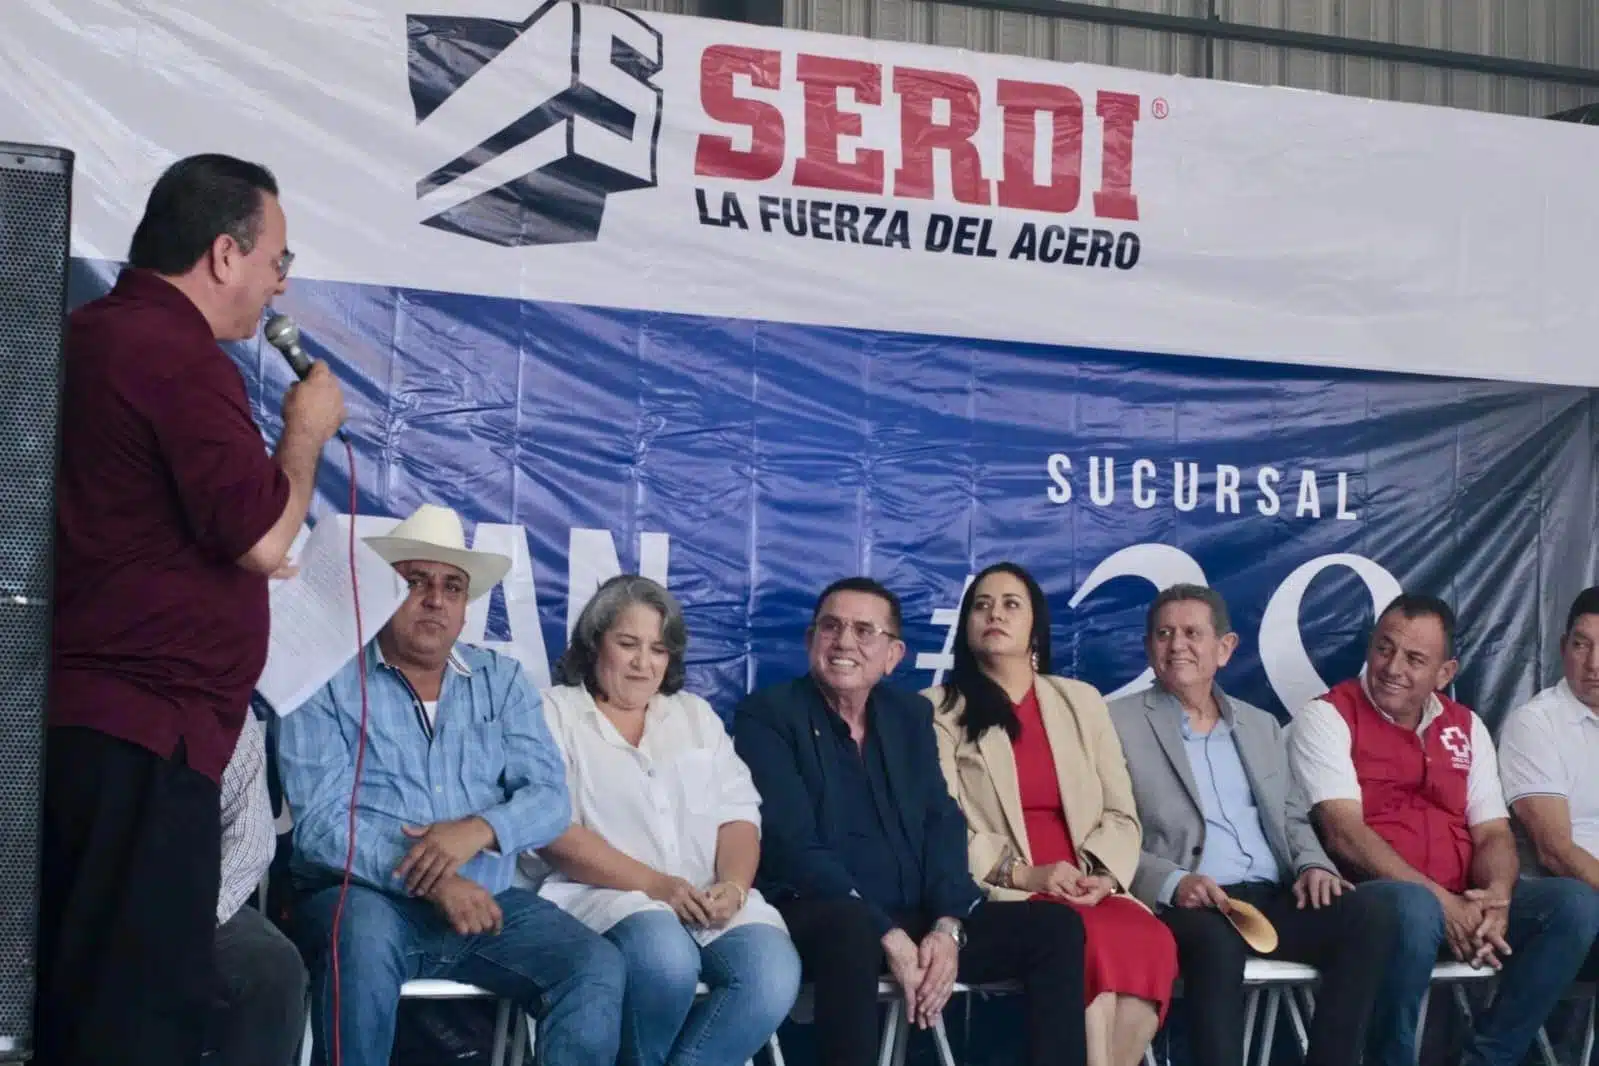 Grupo Serdi abre una sucursal en Juan José Ríos